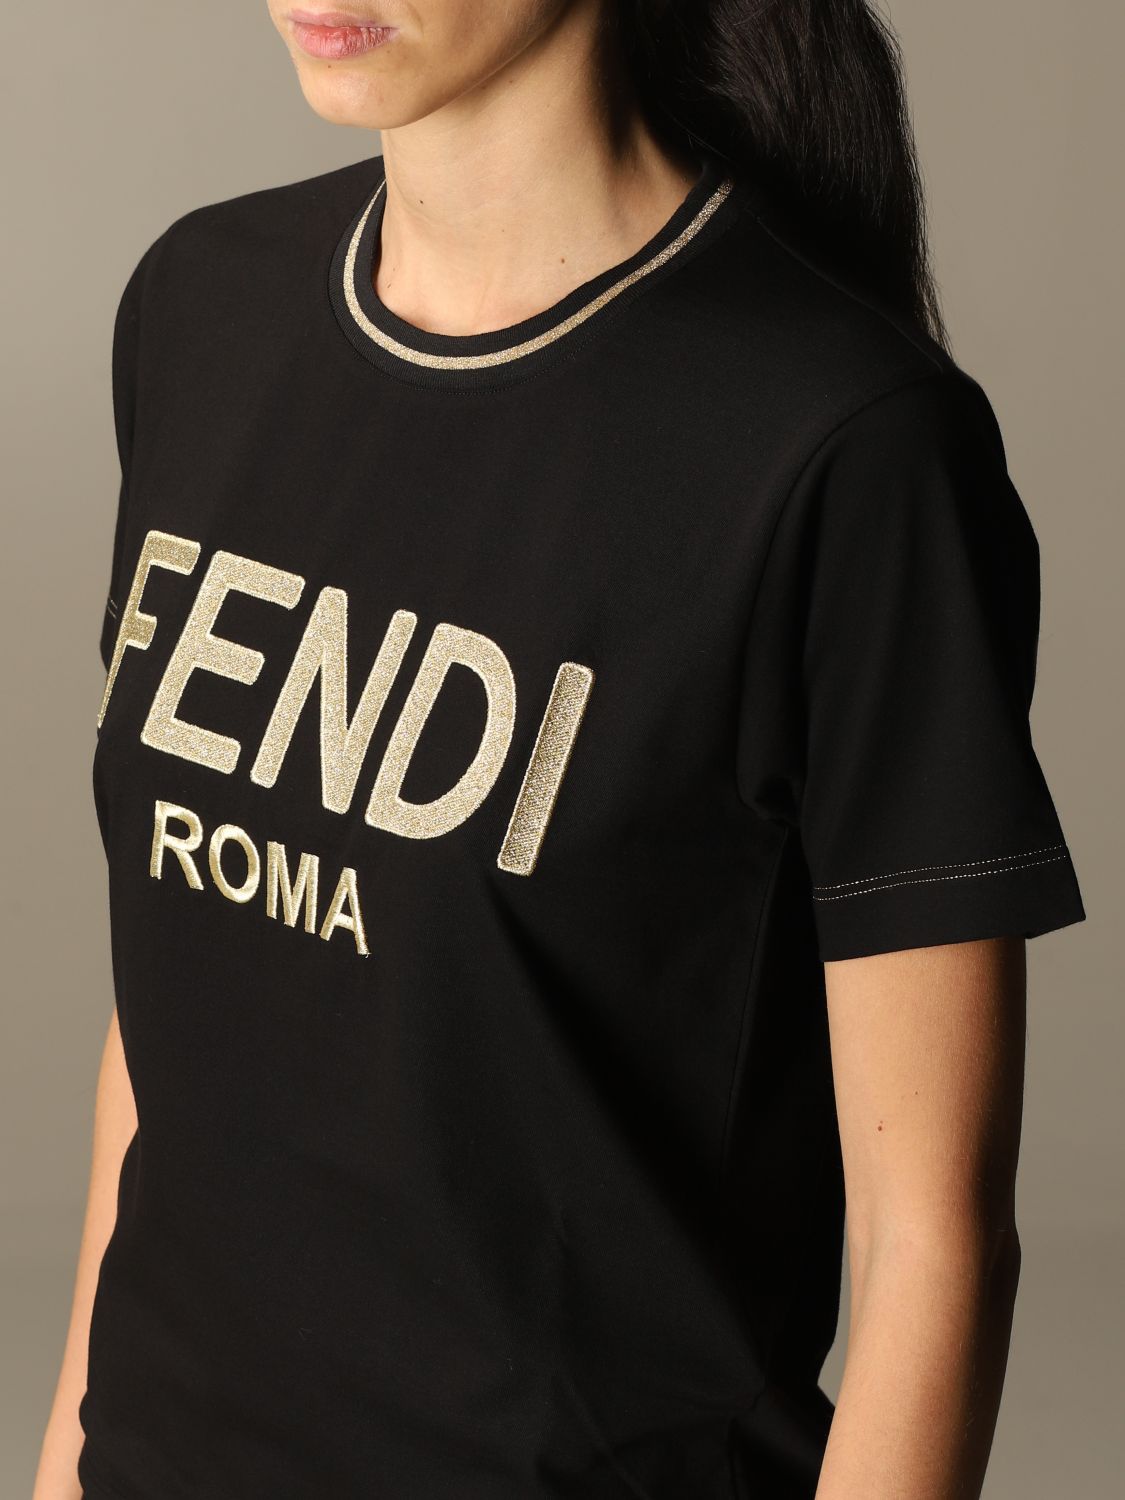 FENDI: T-shirt with Roma logo - Black | T-Shirt Fendi FS7254 AC6B